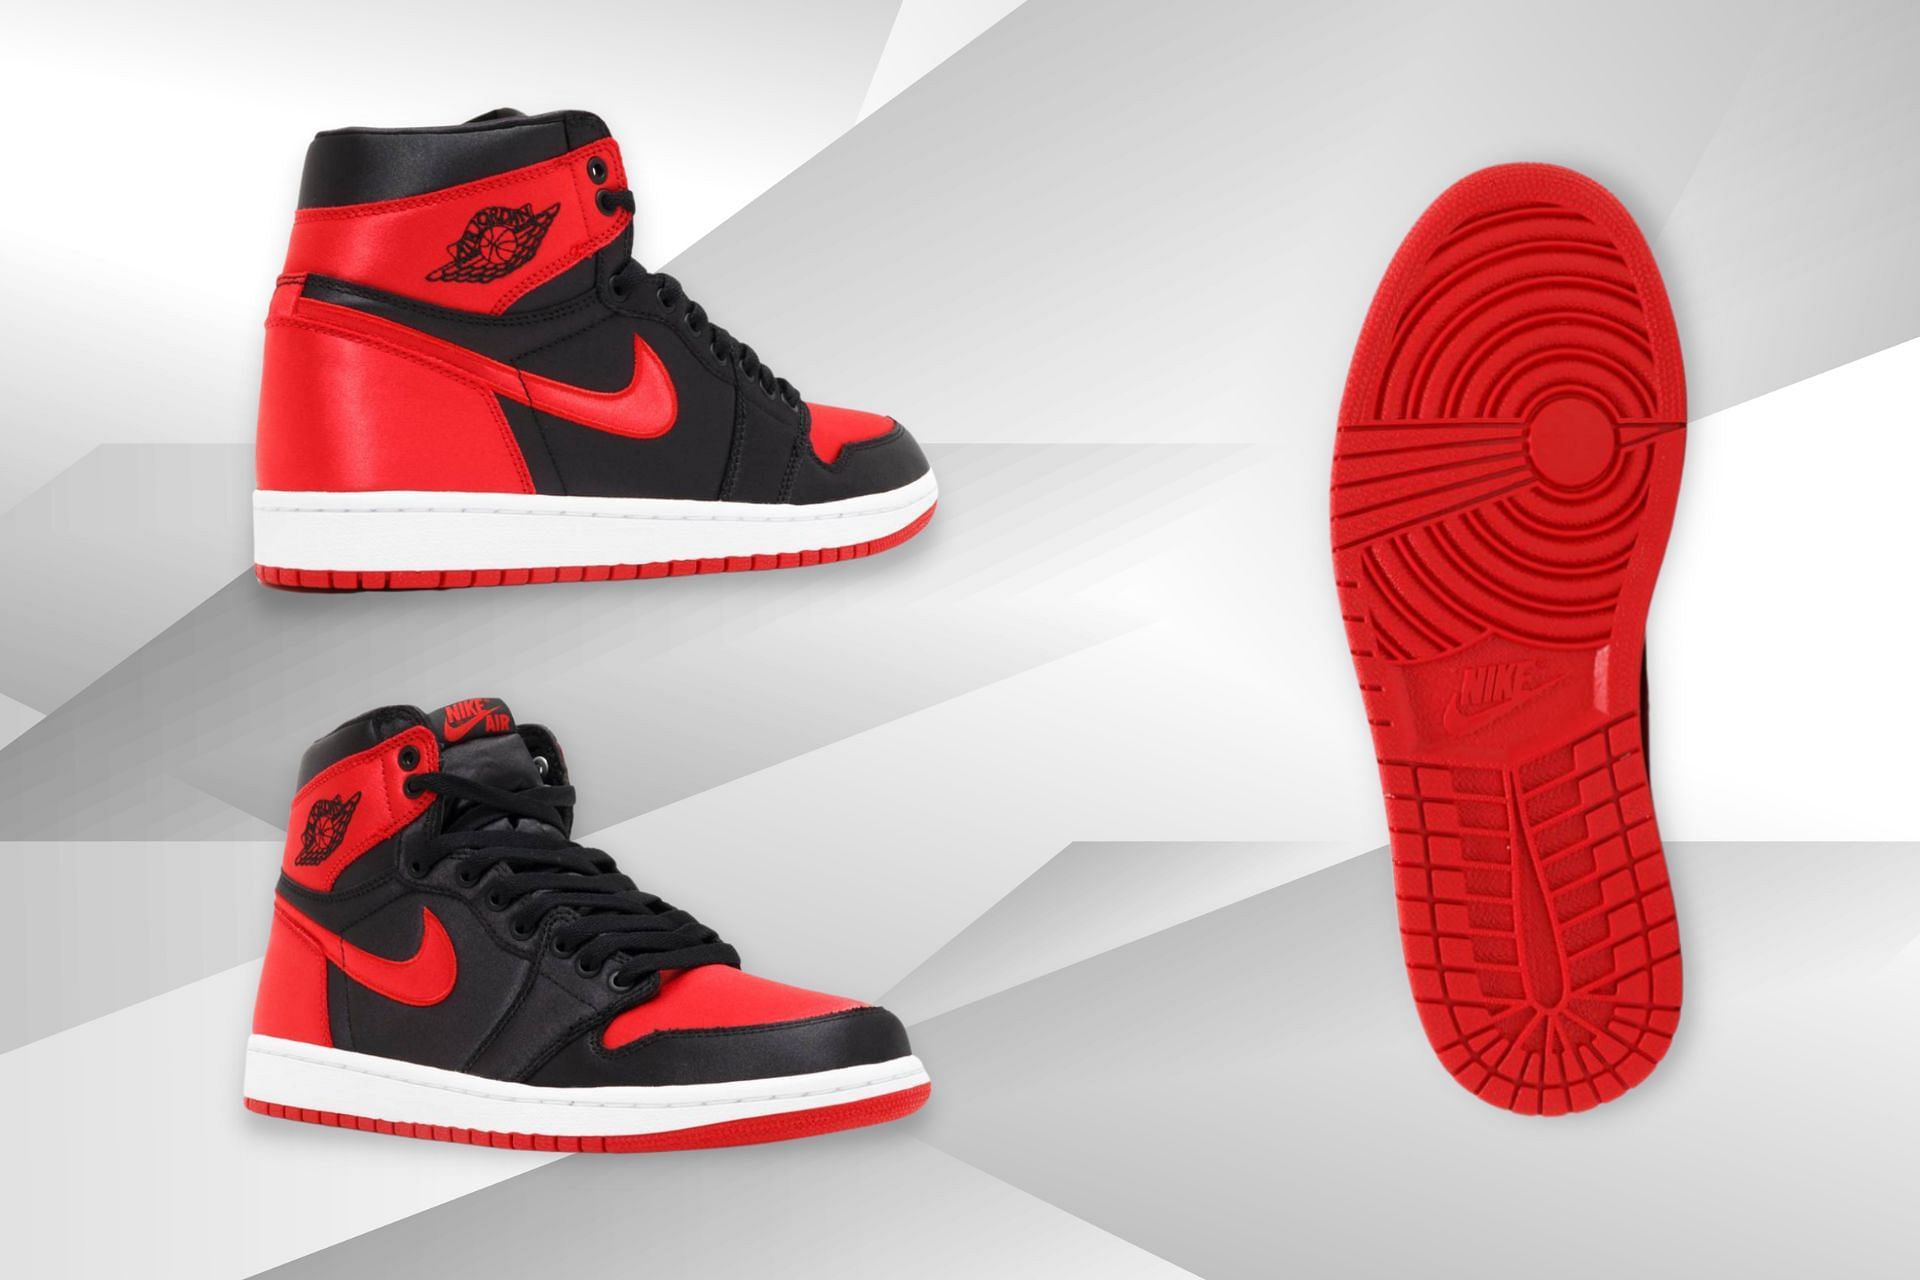 The upcoming Nike Air Jordan 1 High &quot;Satin Bred&quot; sneakers were originally released back in 2016 (Image via Sportskeeda)